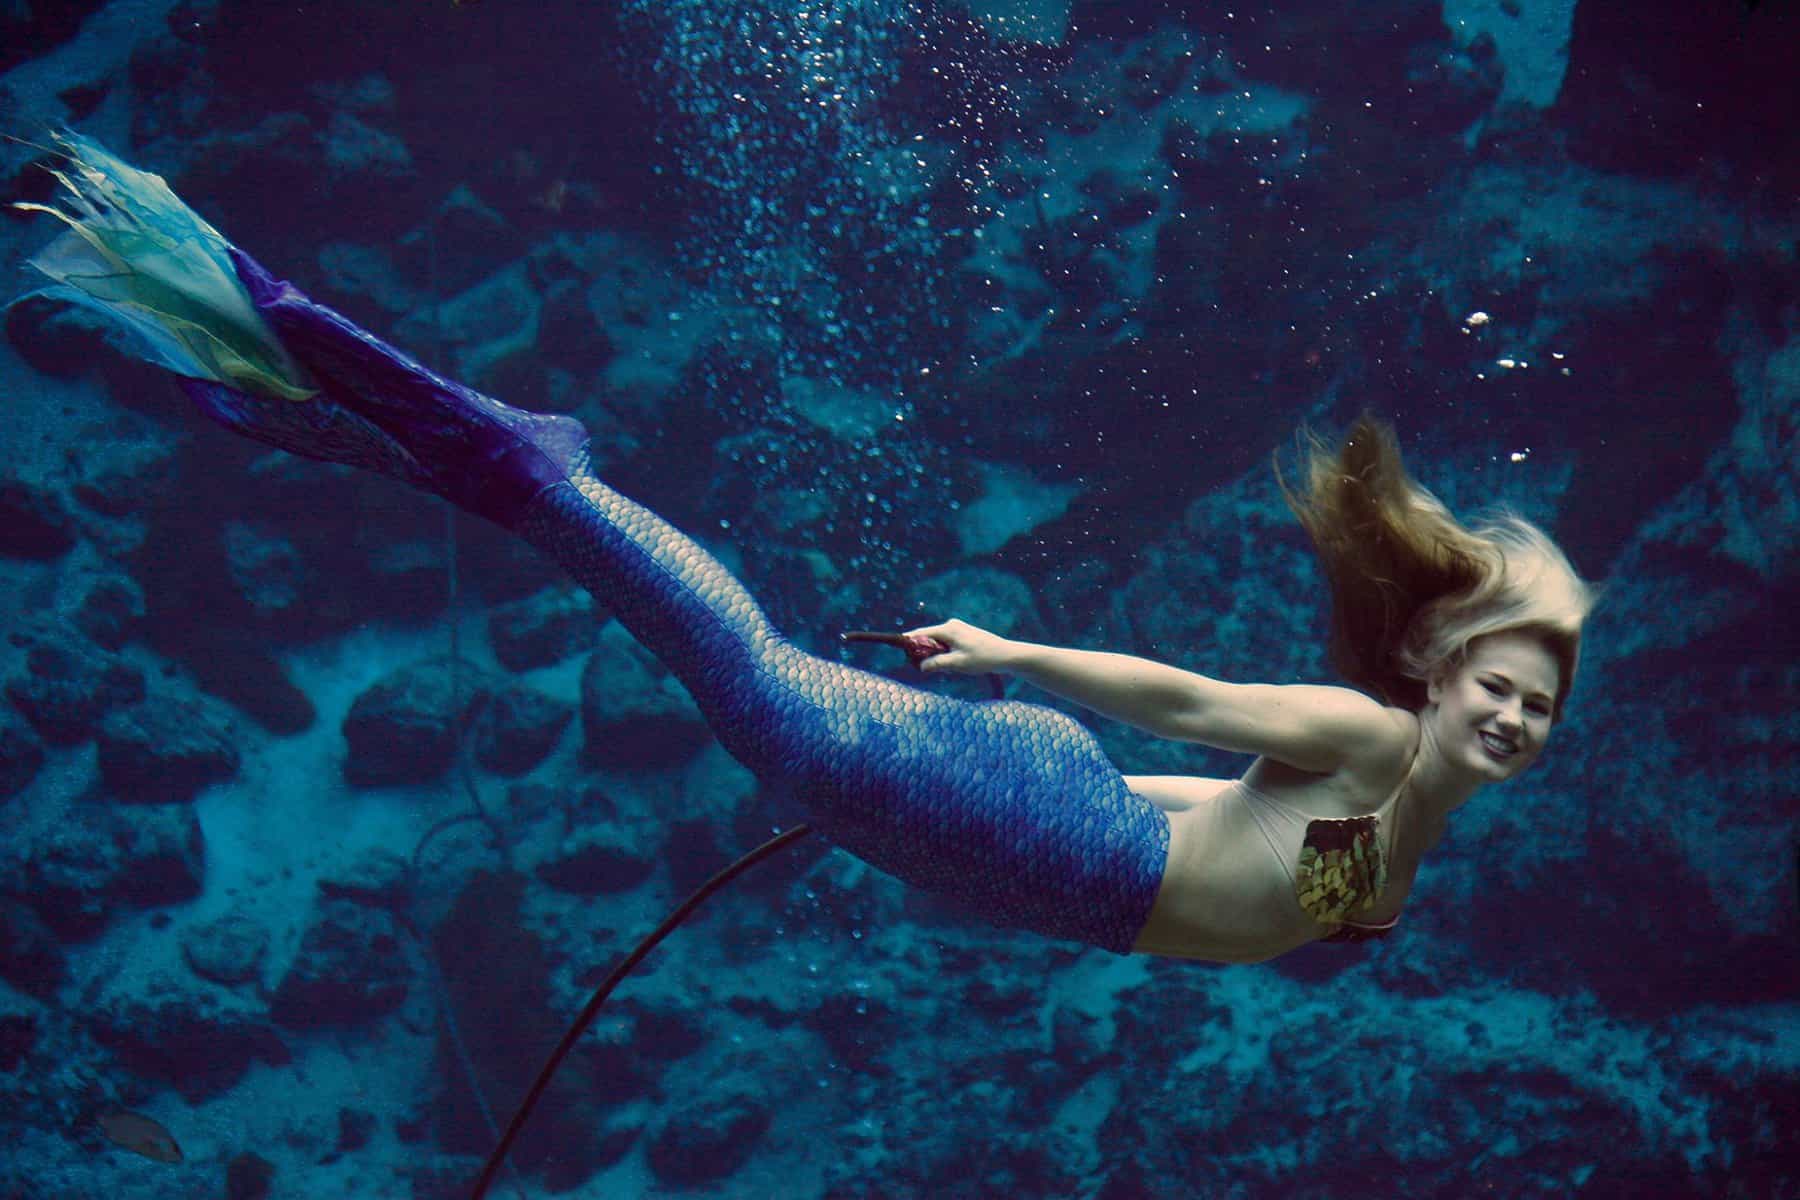 Meet the mermaids at the North Carolina Aquarium at Forth Fisher